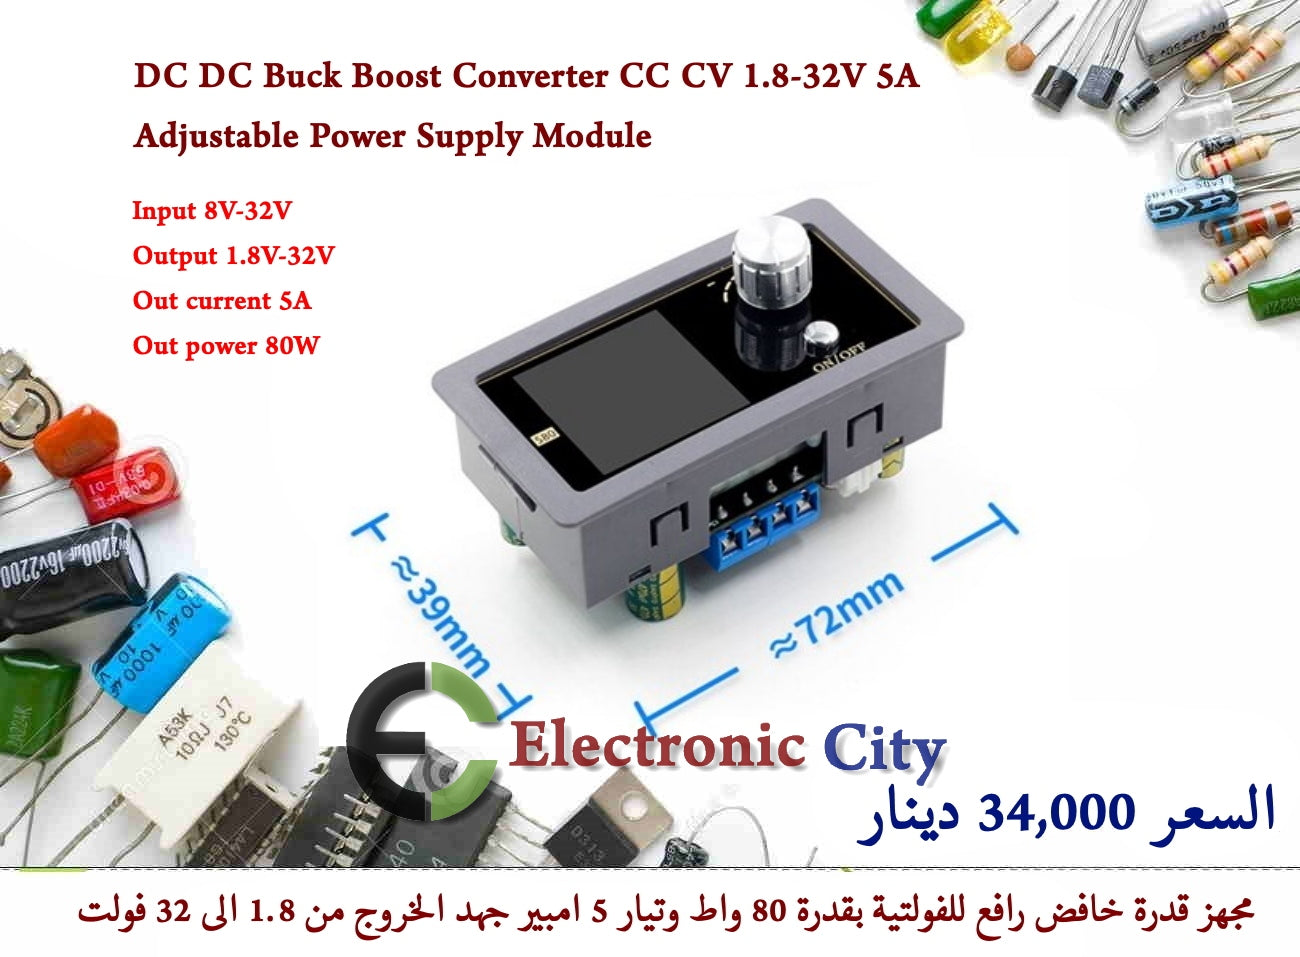 DC DC Buck Boost Converter CC CV 1.8-32V 5A Adjustable Power Supply Module